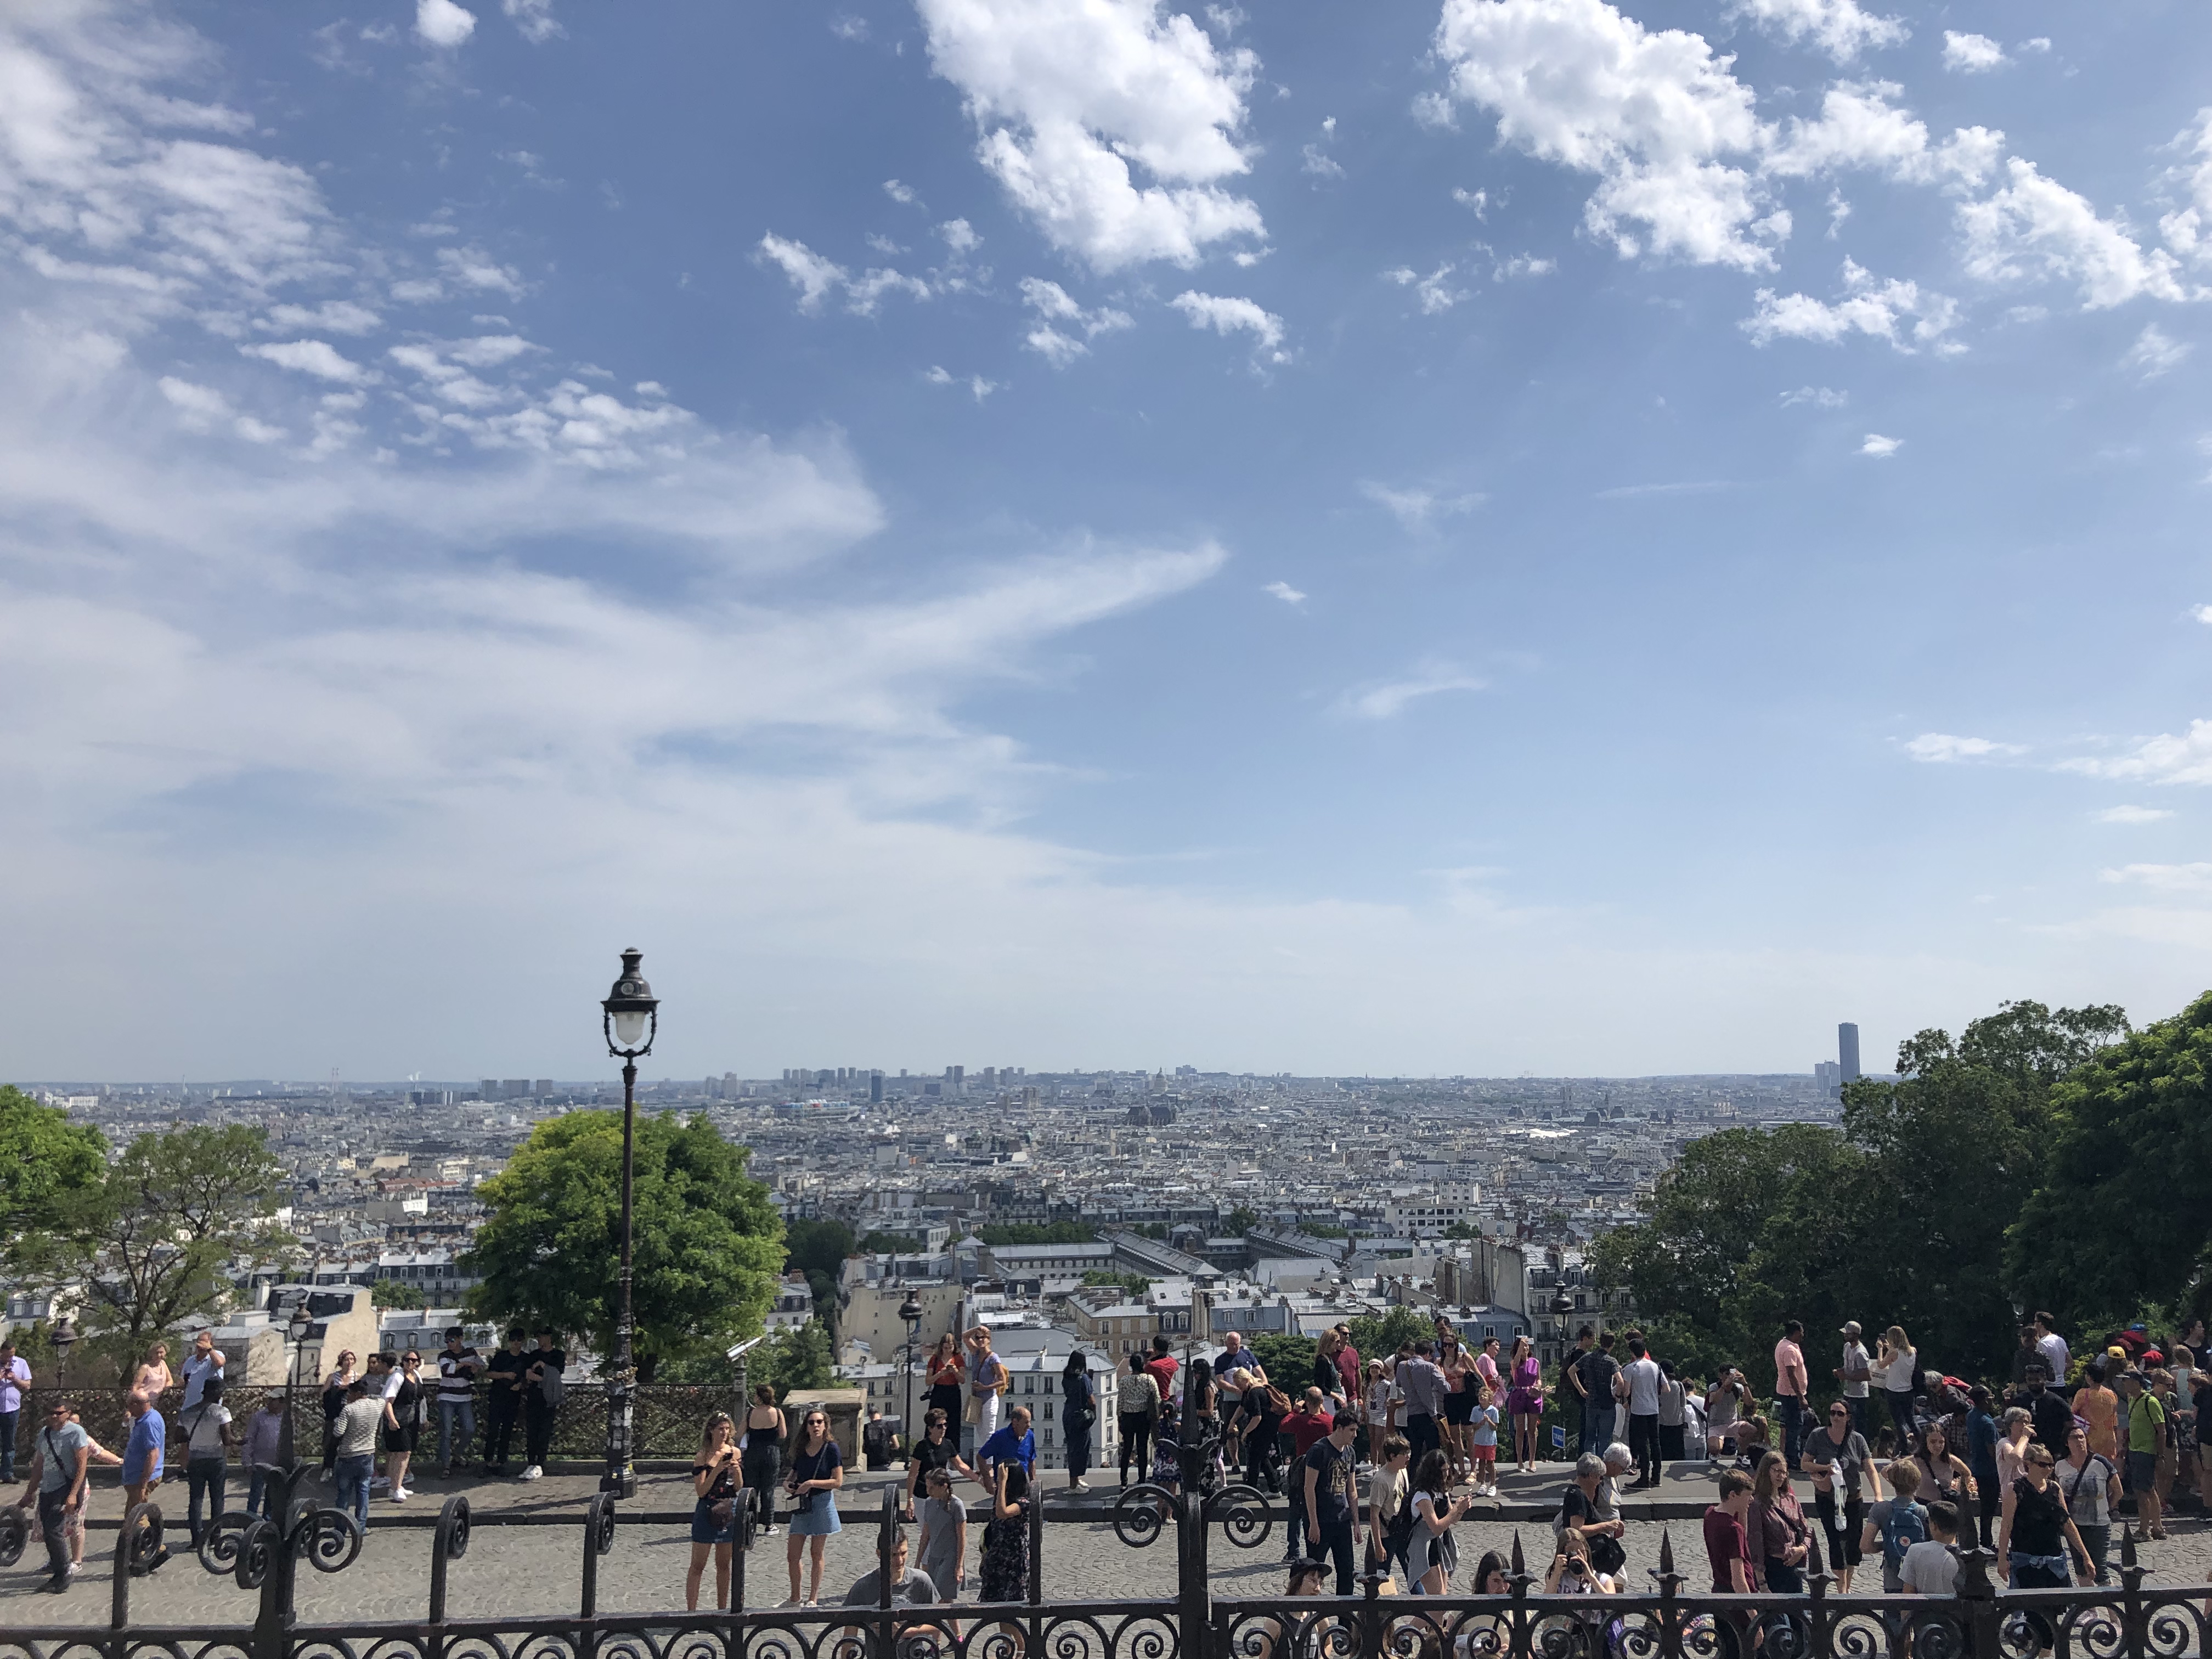 City of Paris with blue skies